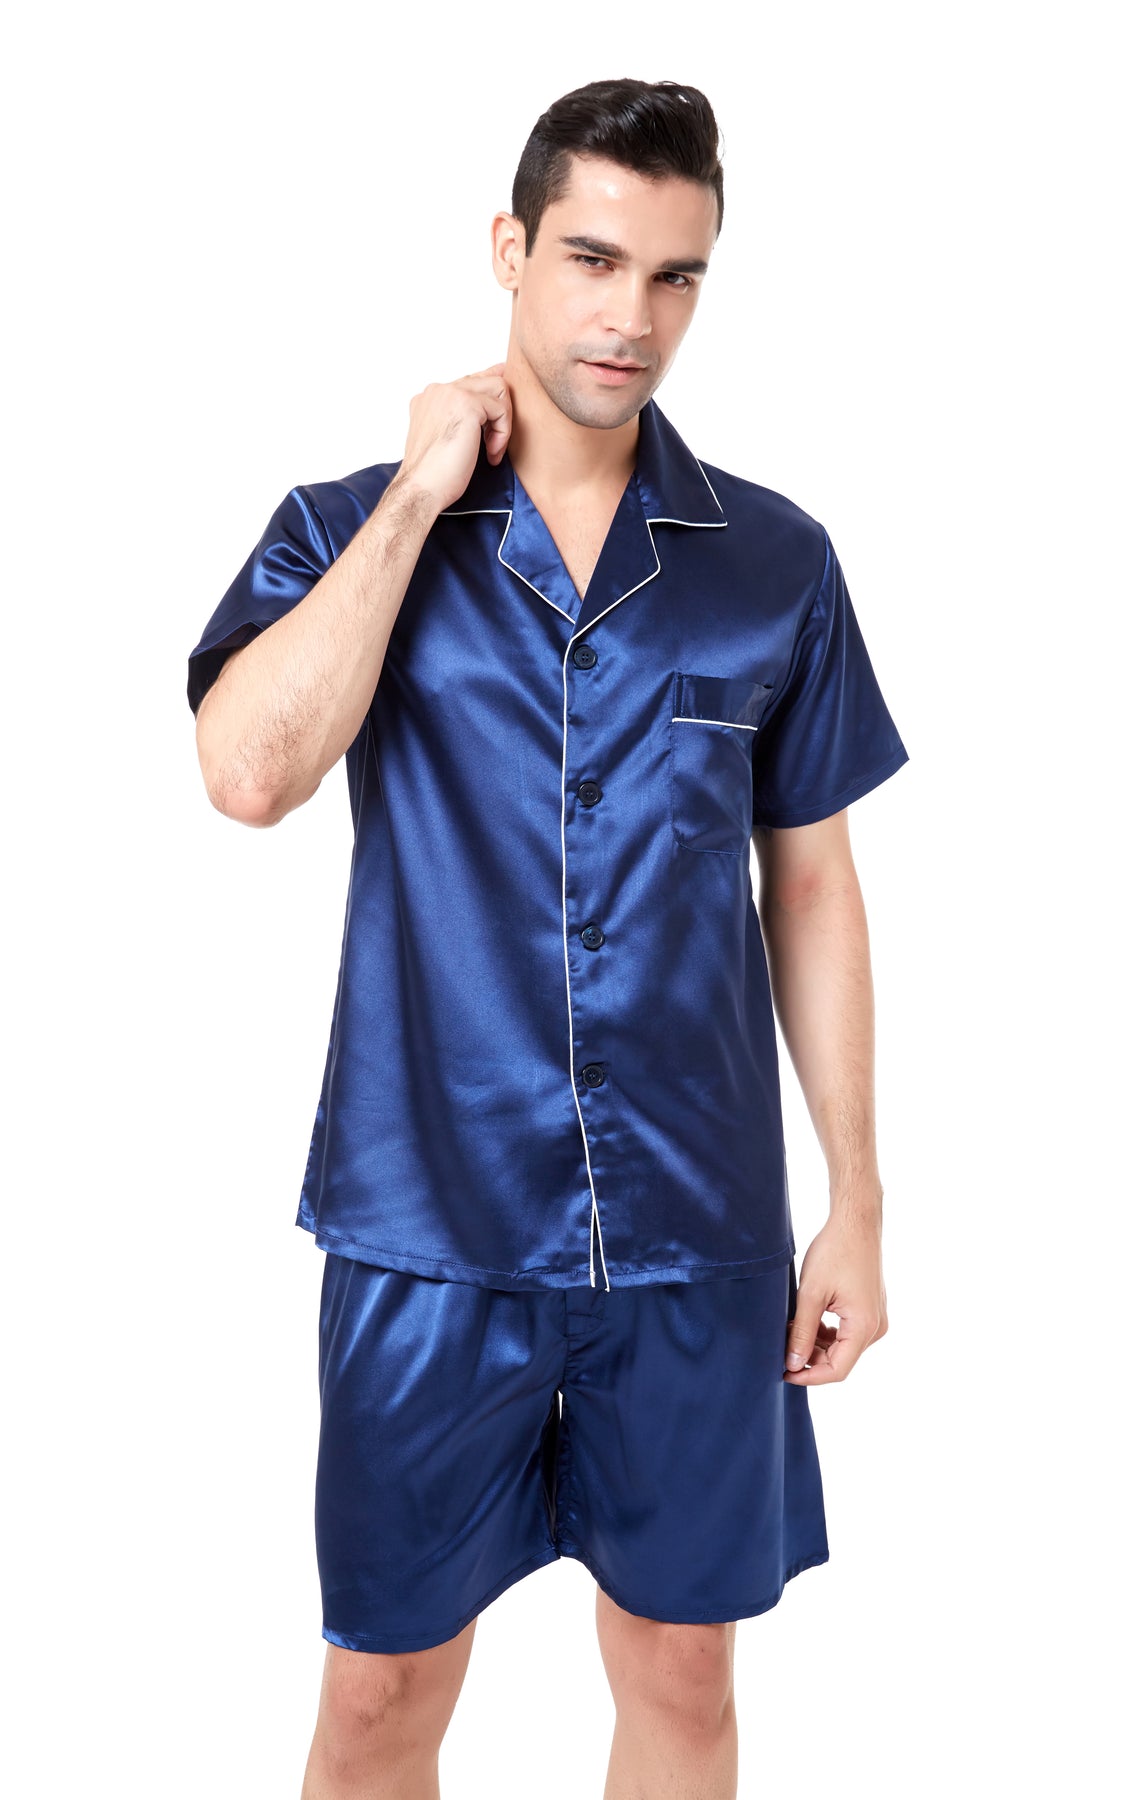 Men's Silk Satin Pajama Set Short Sleeve-Navy Blue with White Piping ...